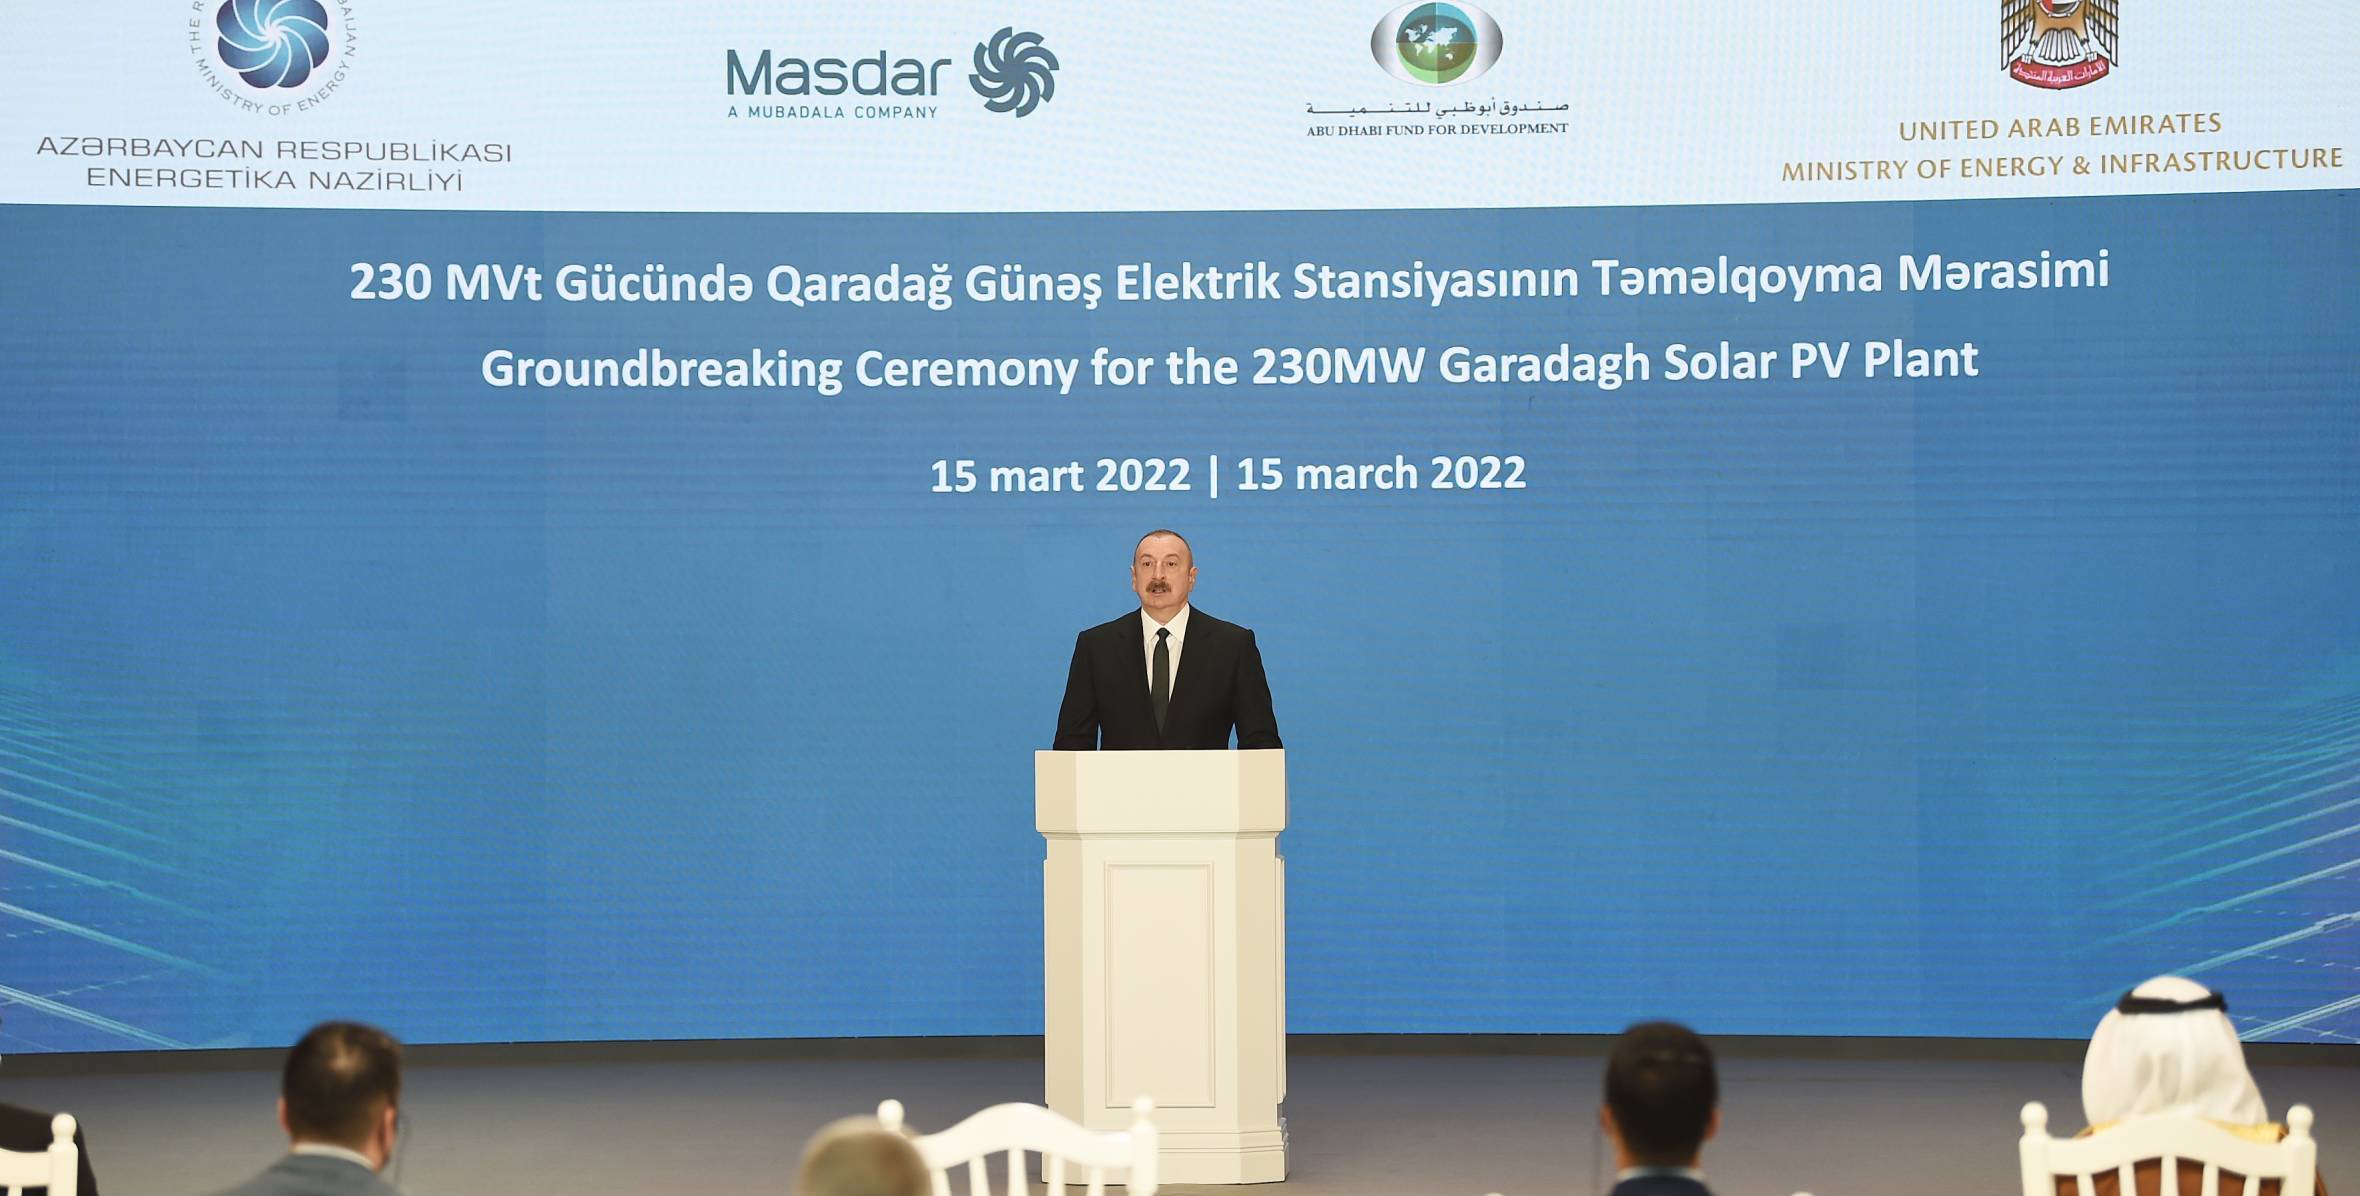 Speech by Ilham Aliyev at the groundbreaking ceremony for Garadagh Solar Power Plant